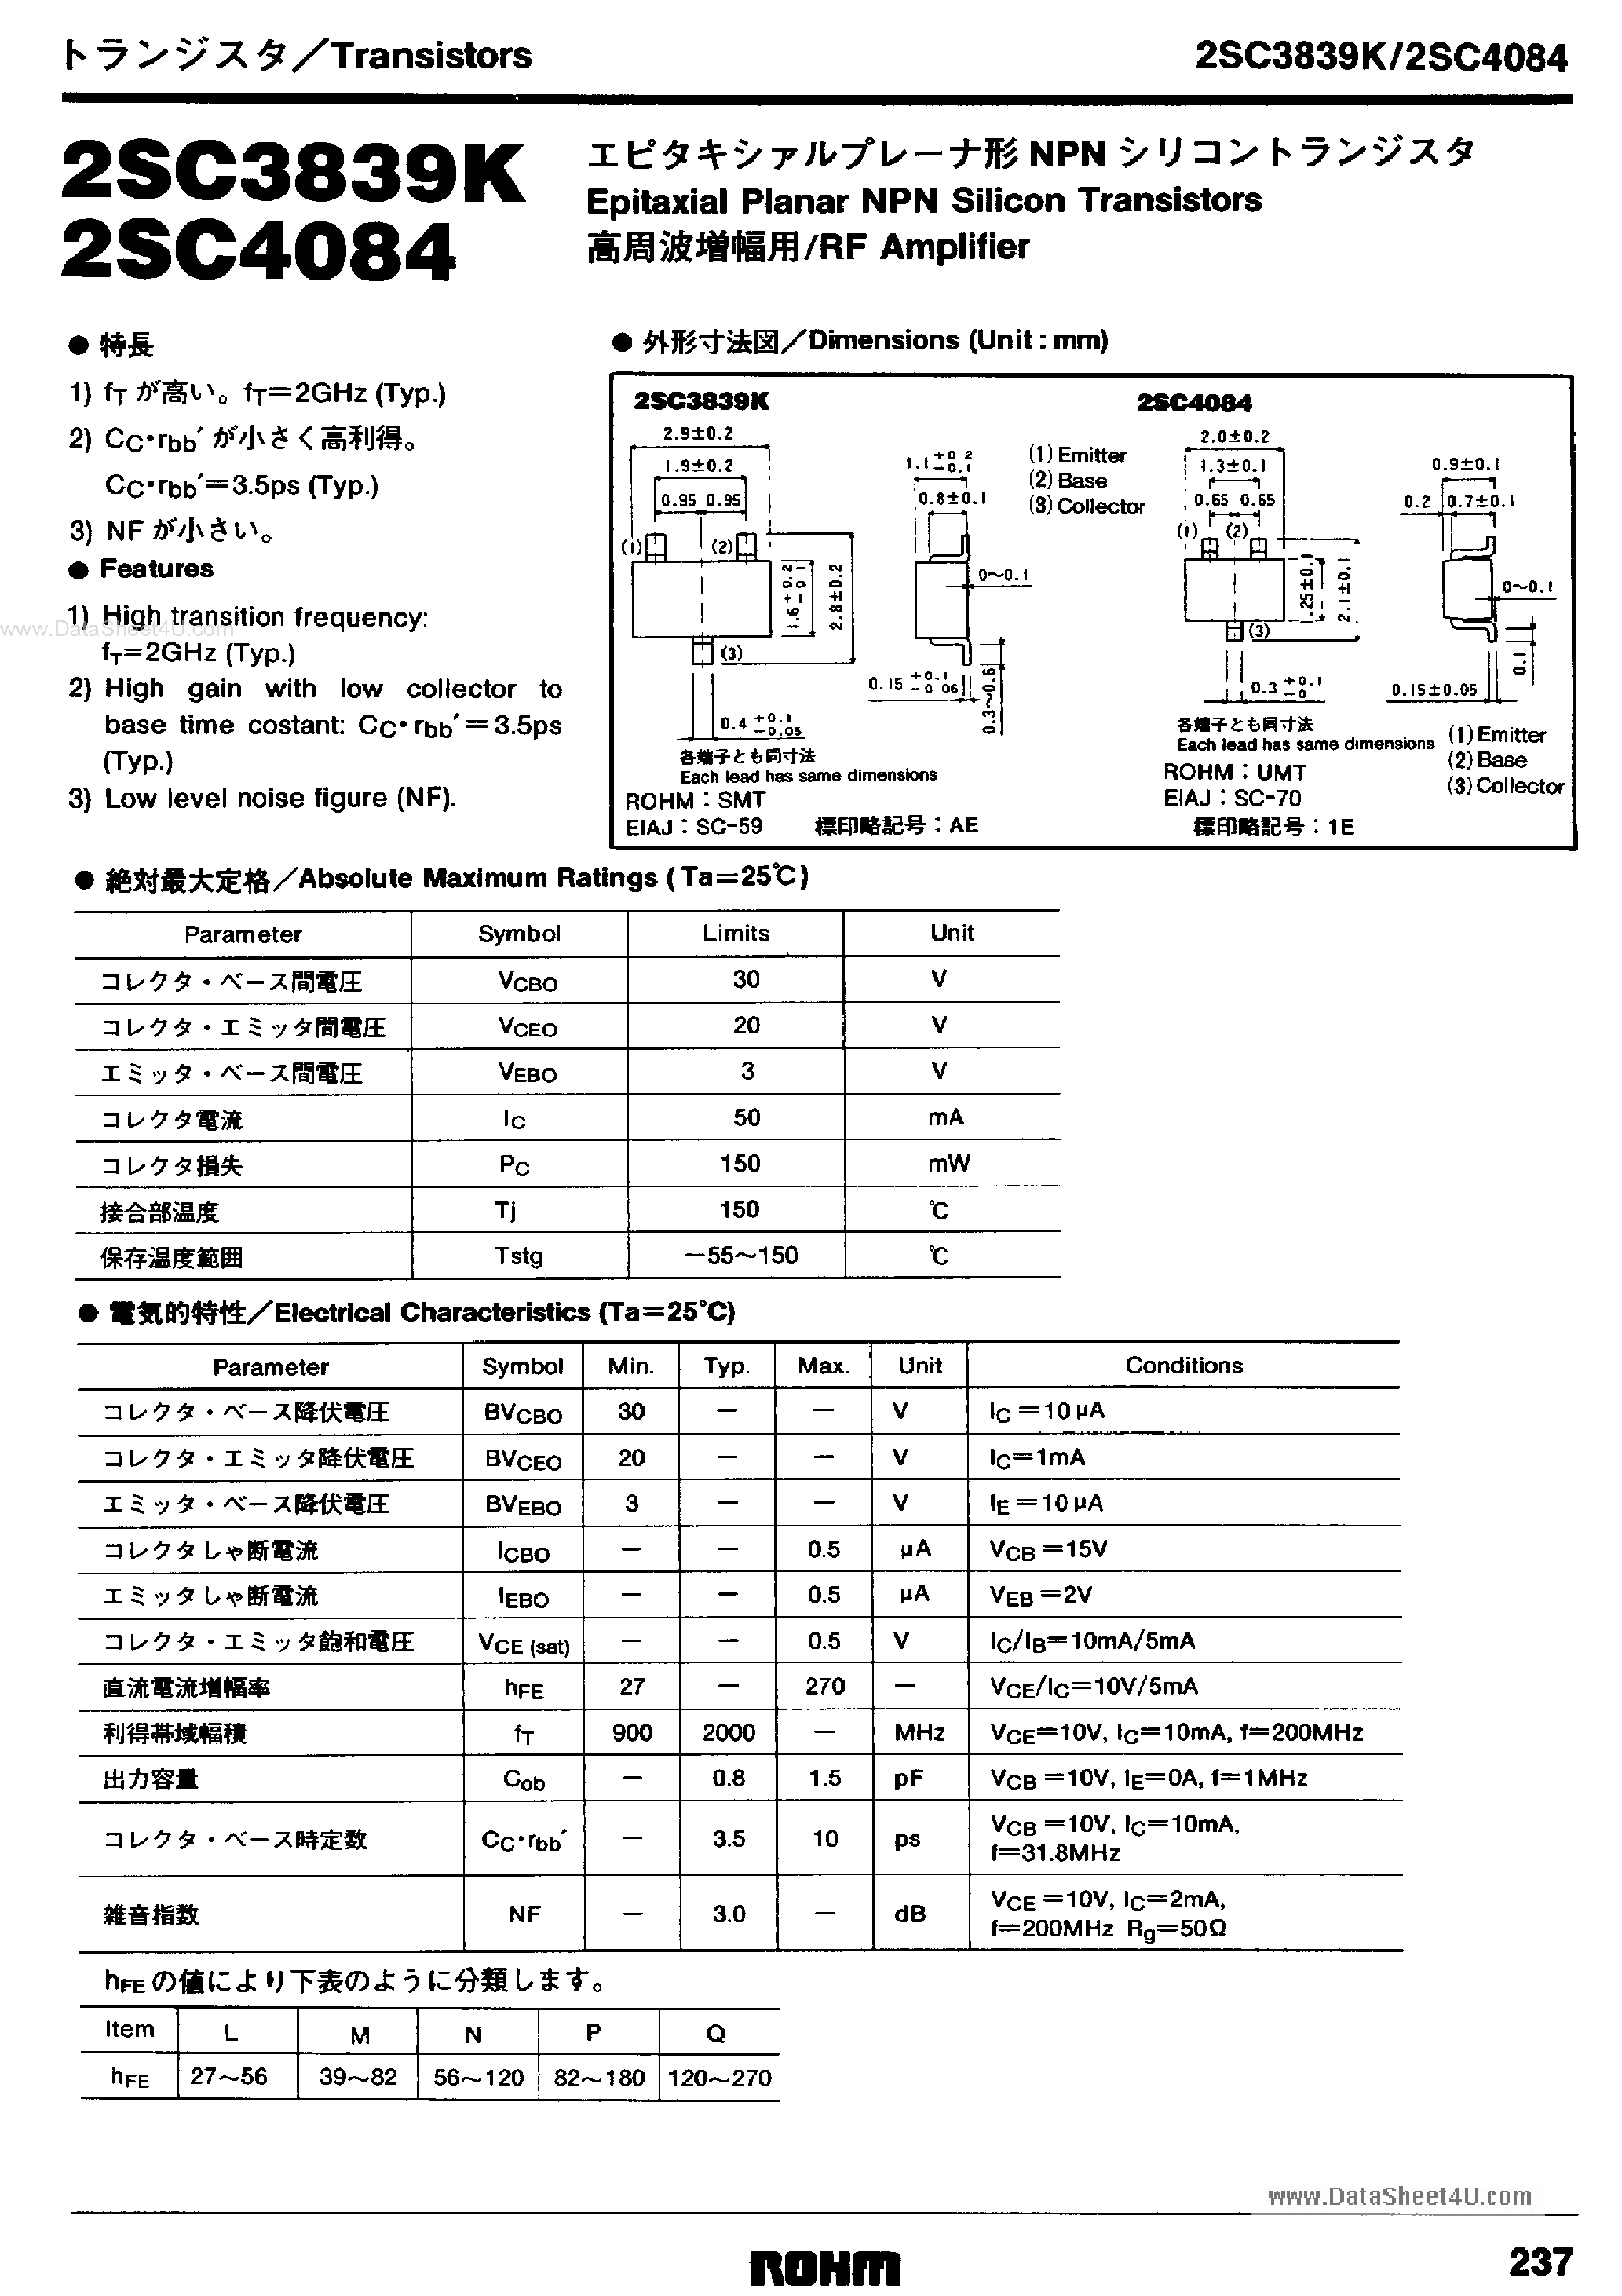 Datasheet 2SC3839K - (2SC3839K / 2SC4084) Epitaxial Planar NPN Silicon Transistors page 1